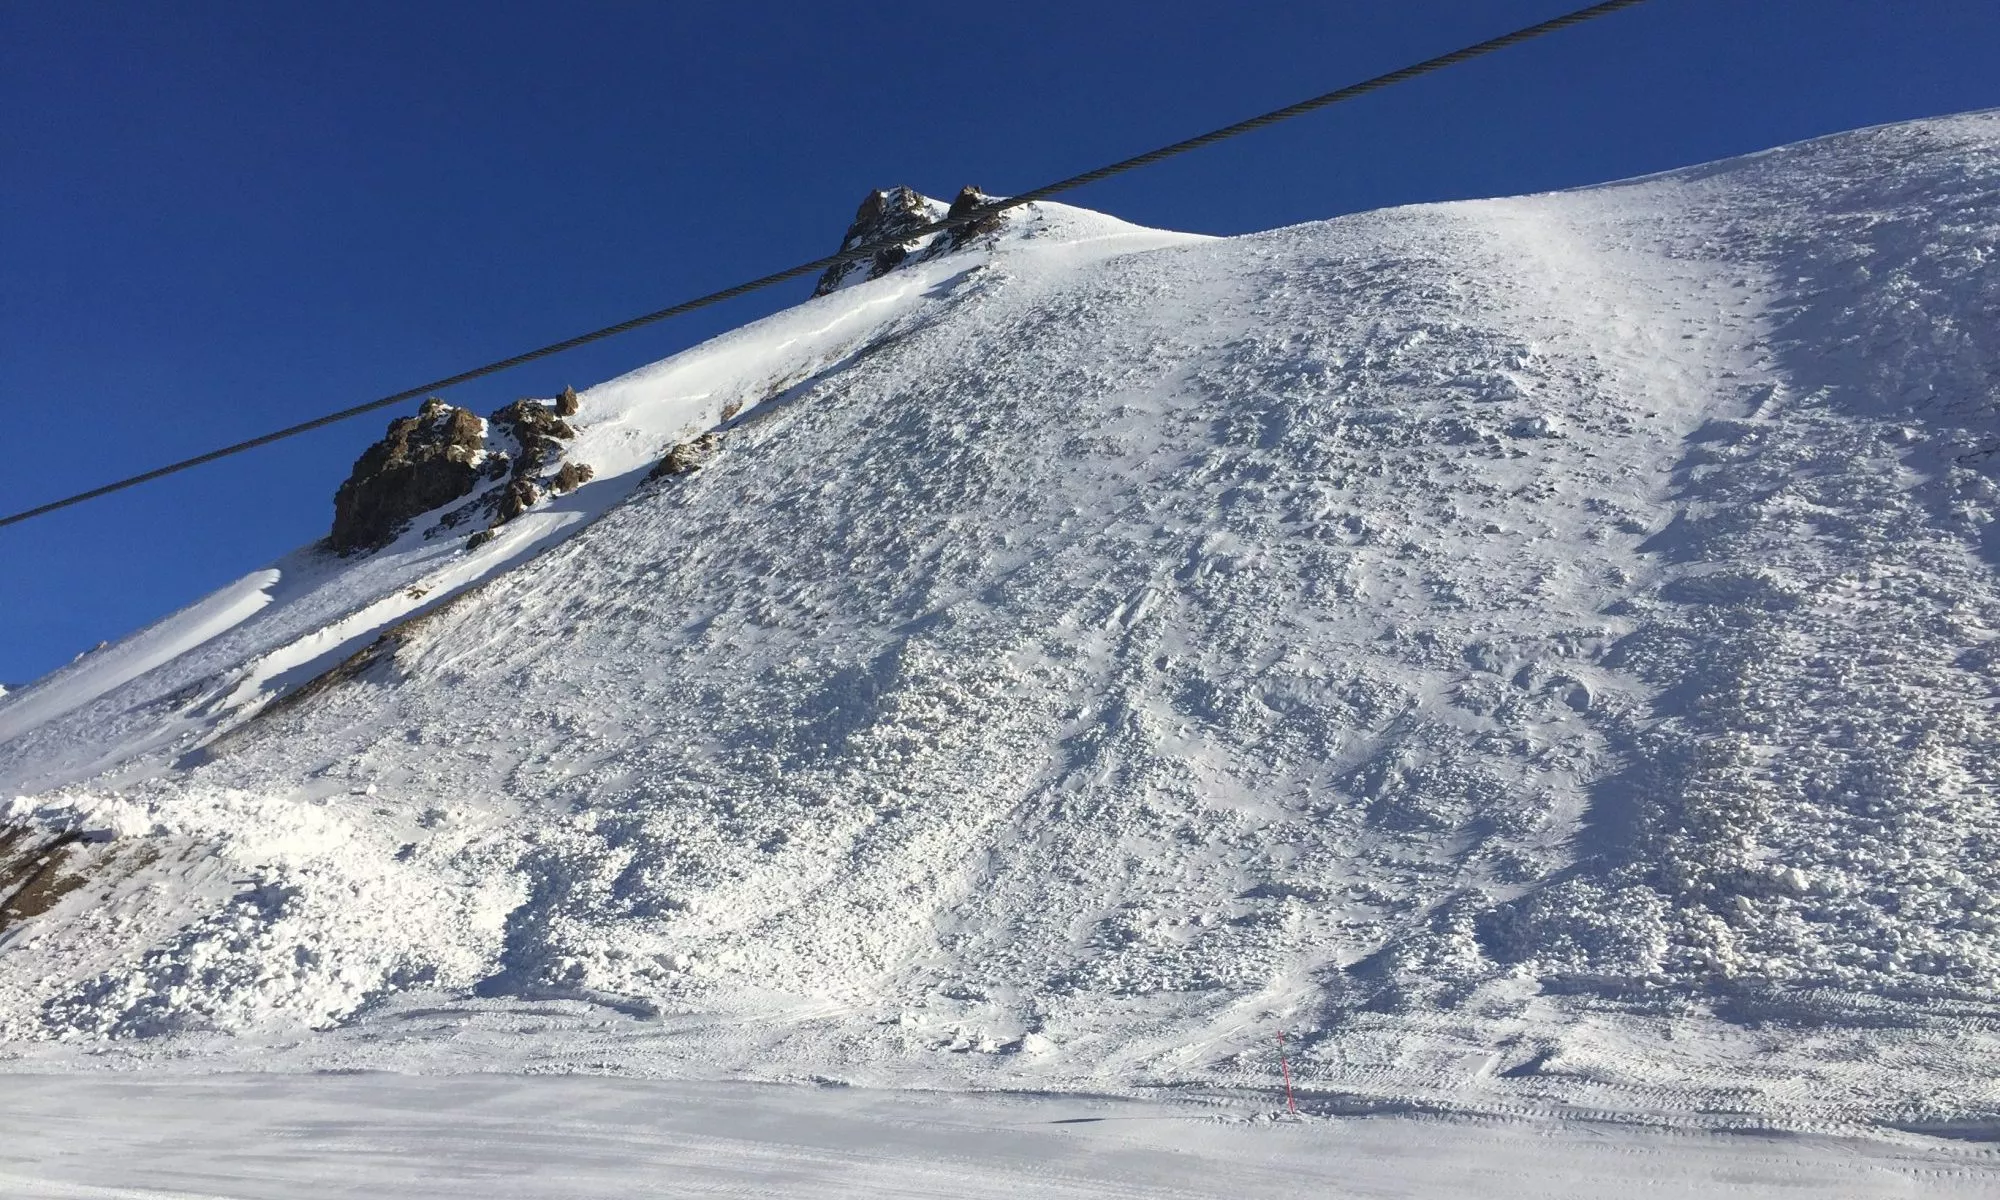 Avalanche Ski Club in Ukraine, Europe | Snowboarding,Skiing - Rated 0.9